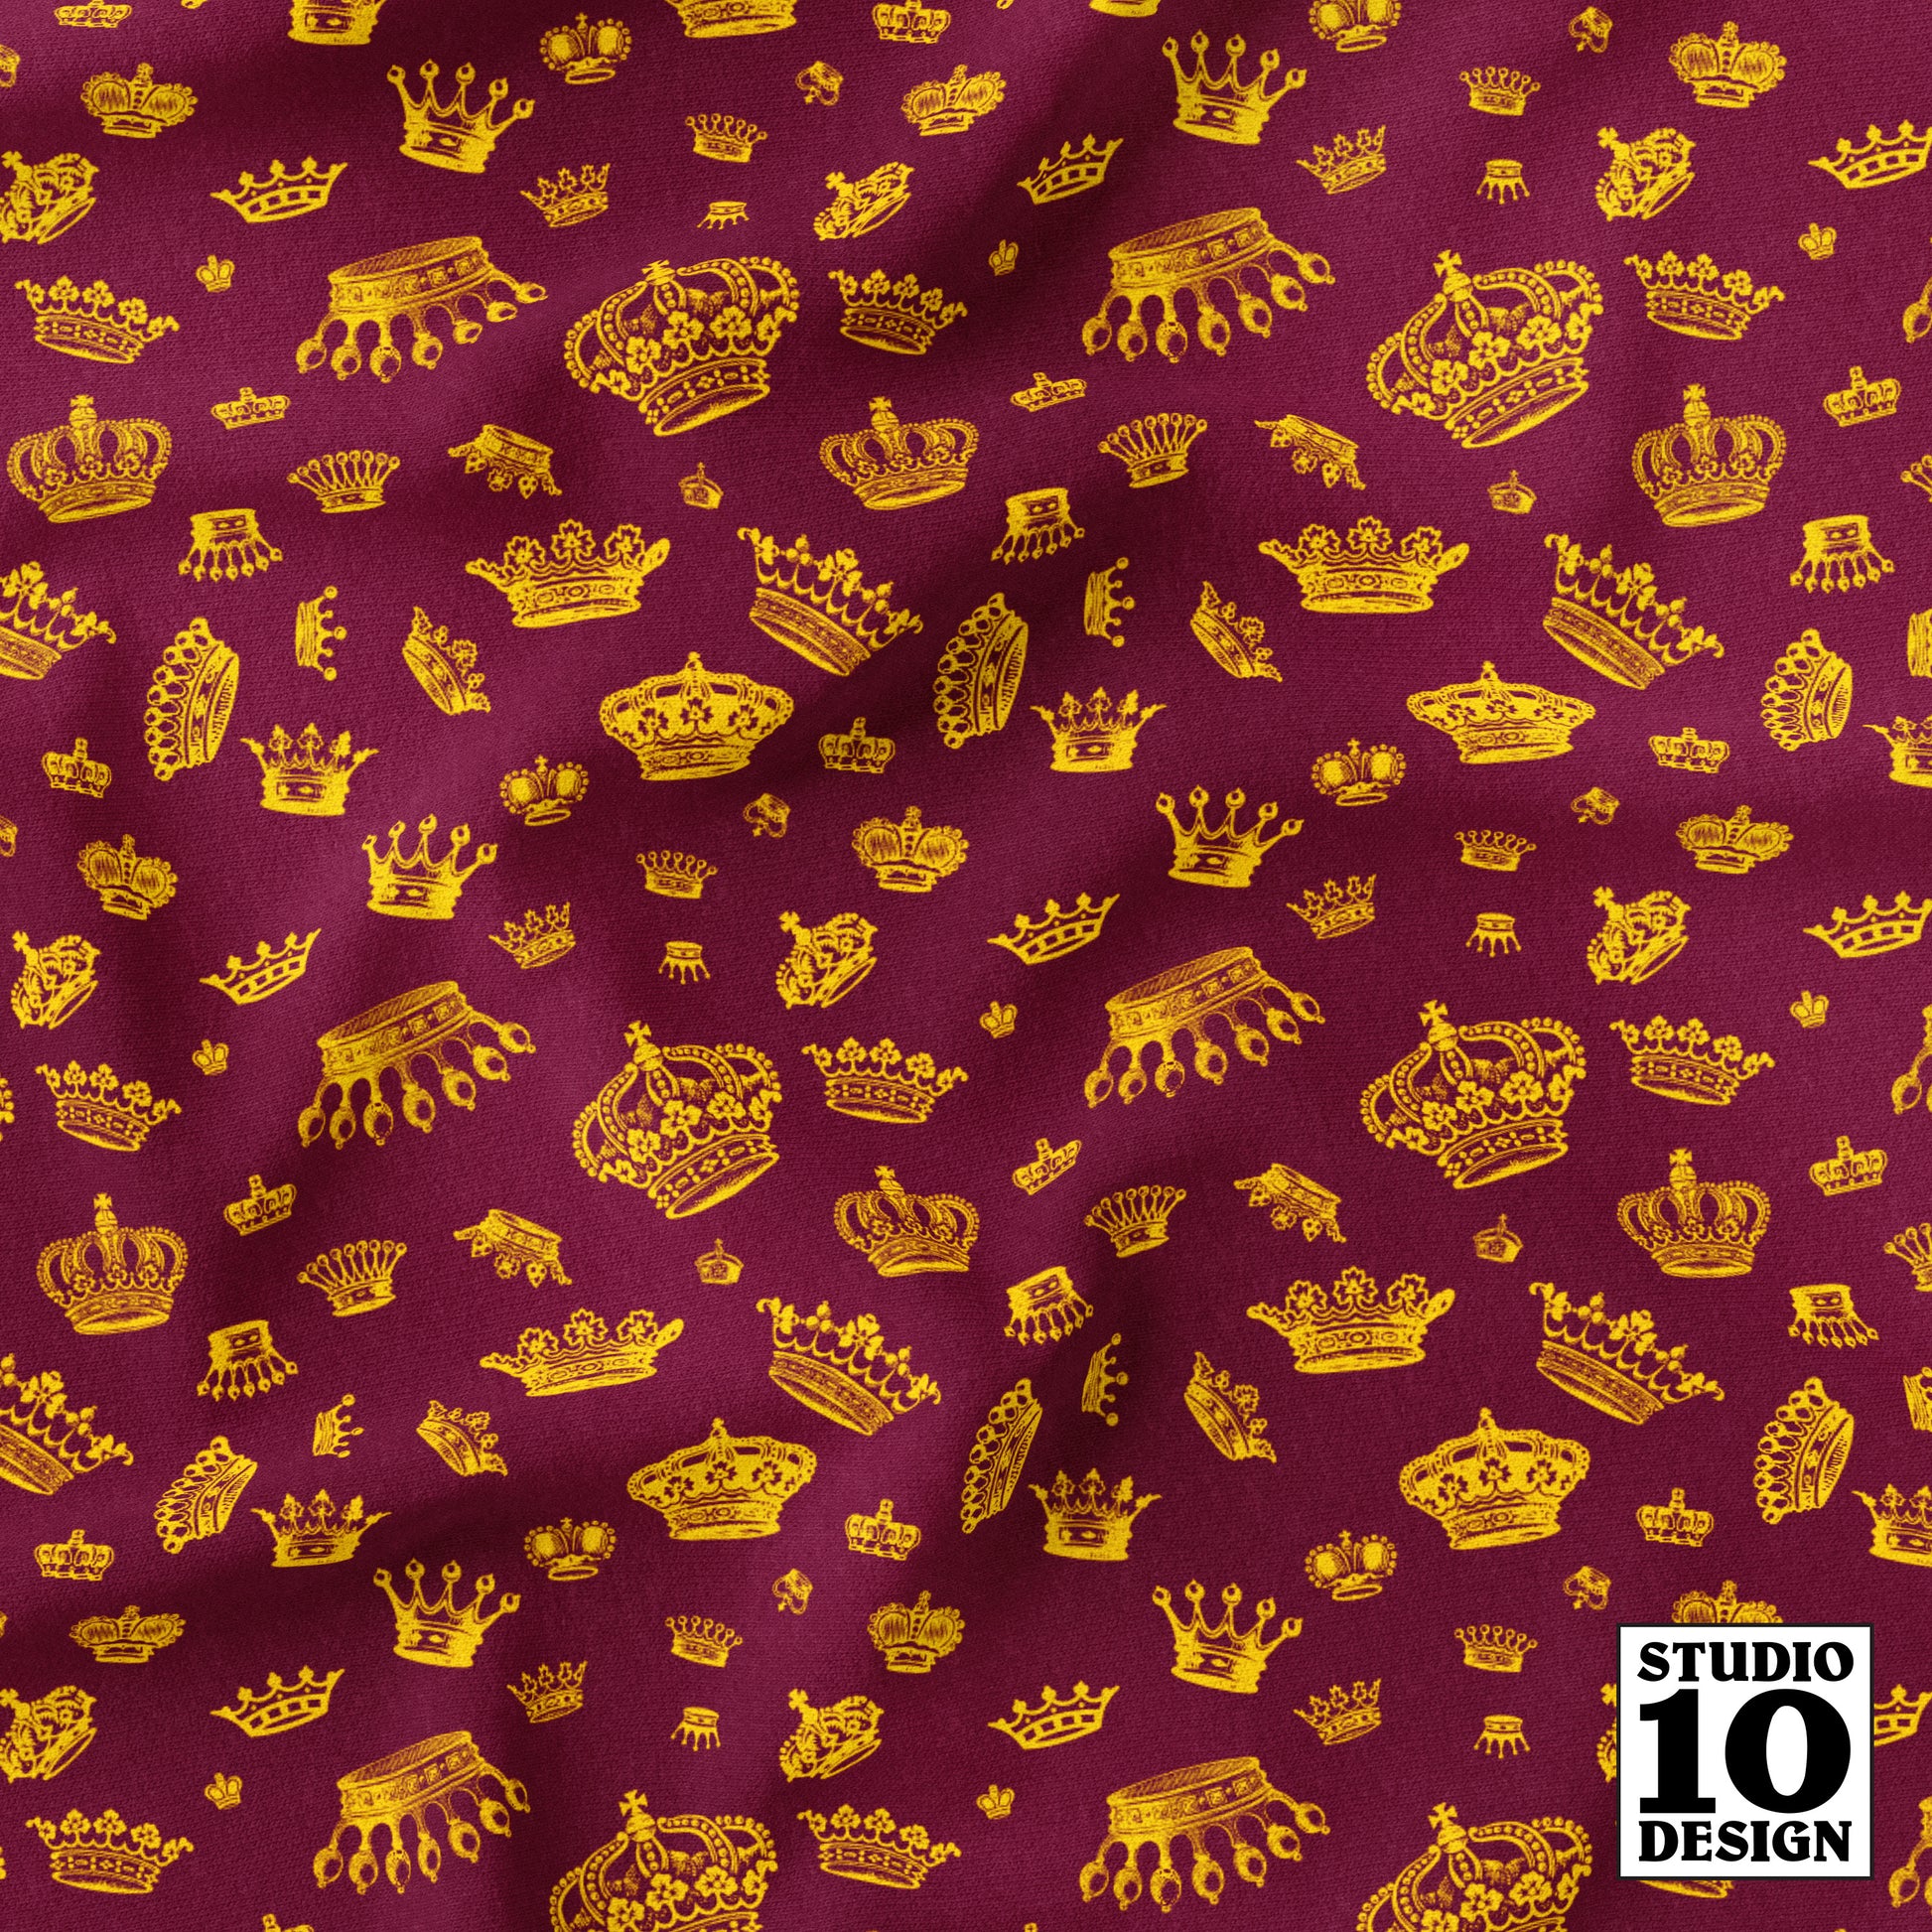 Royal Crowns Yellow+Maroon Printed Fabric by Studio Ten Design